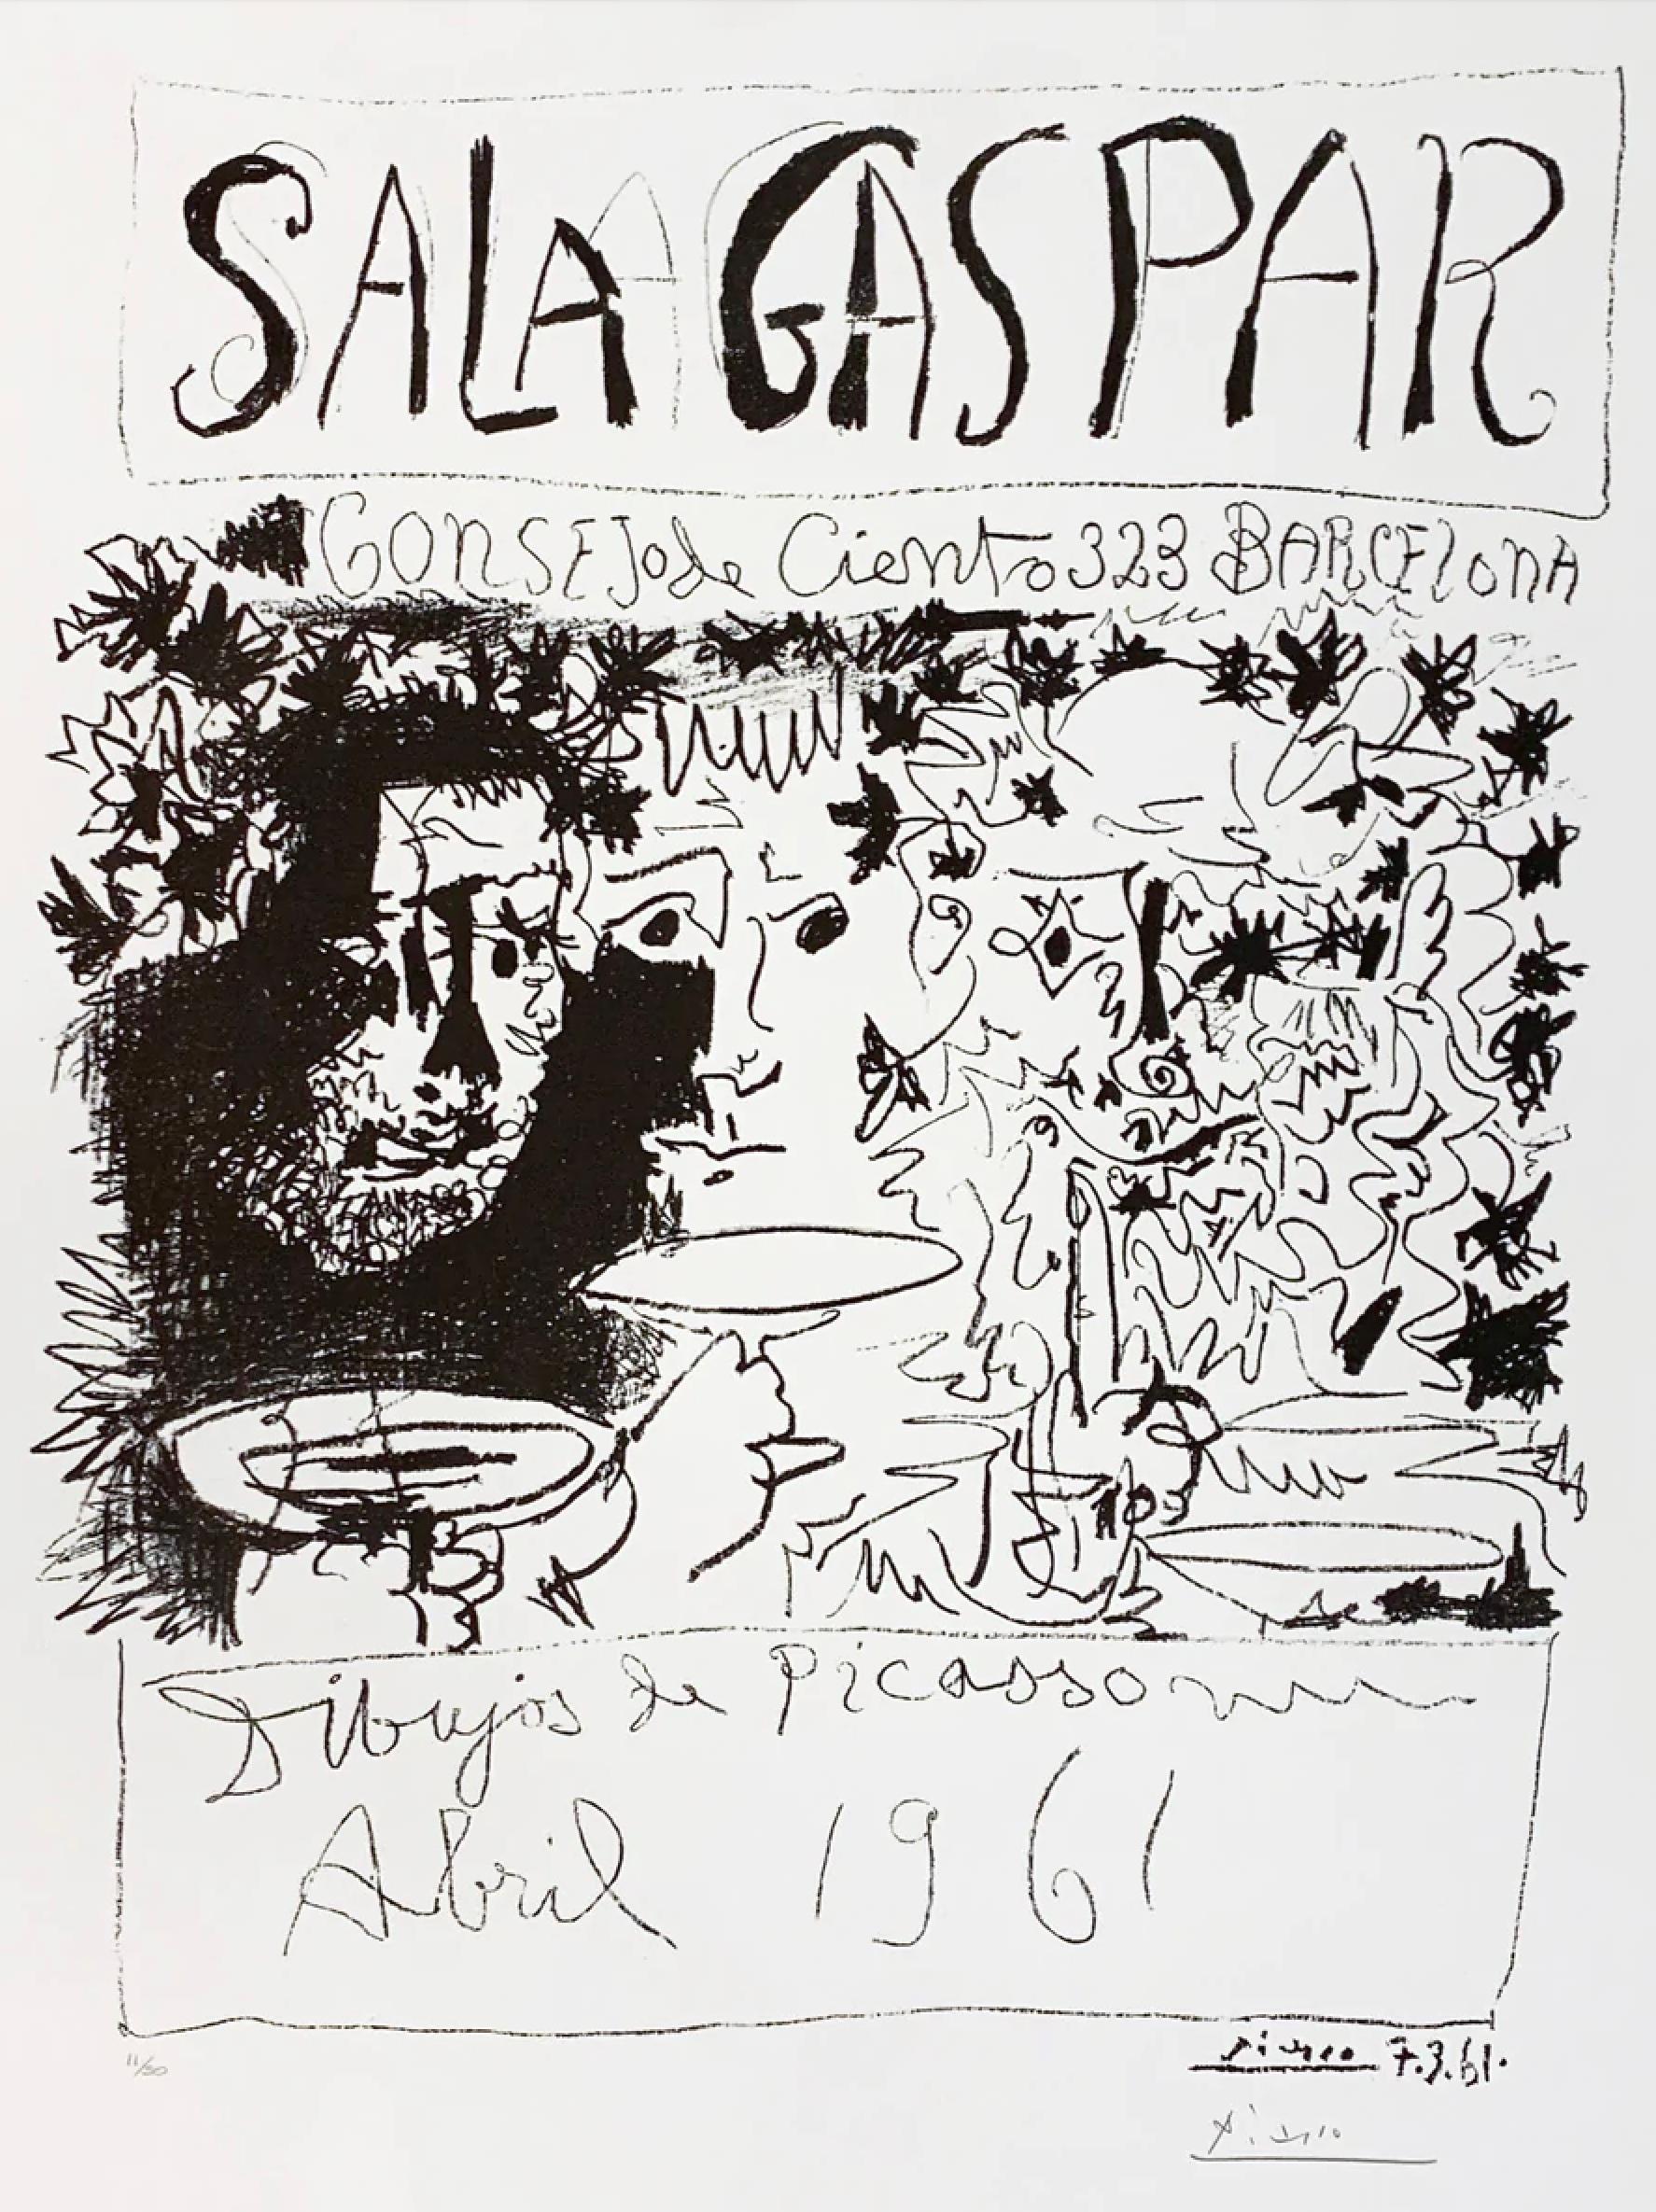 Pablo Picasso Abstract Print - Sala Gaspar, Barcelona 1961